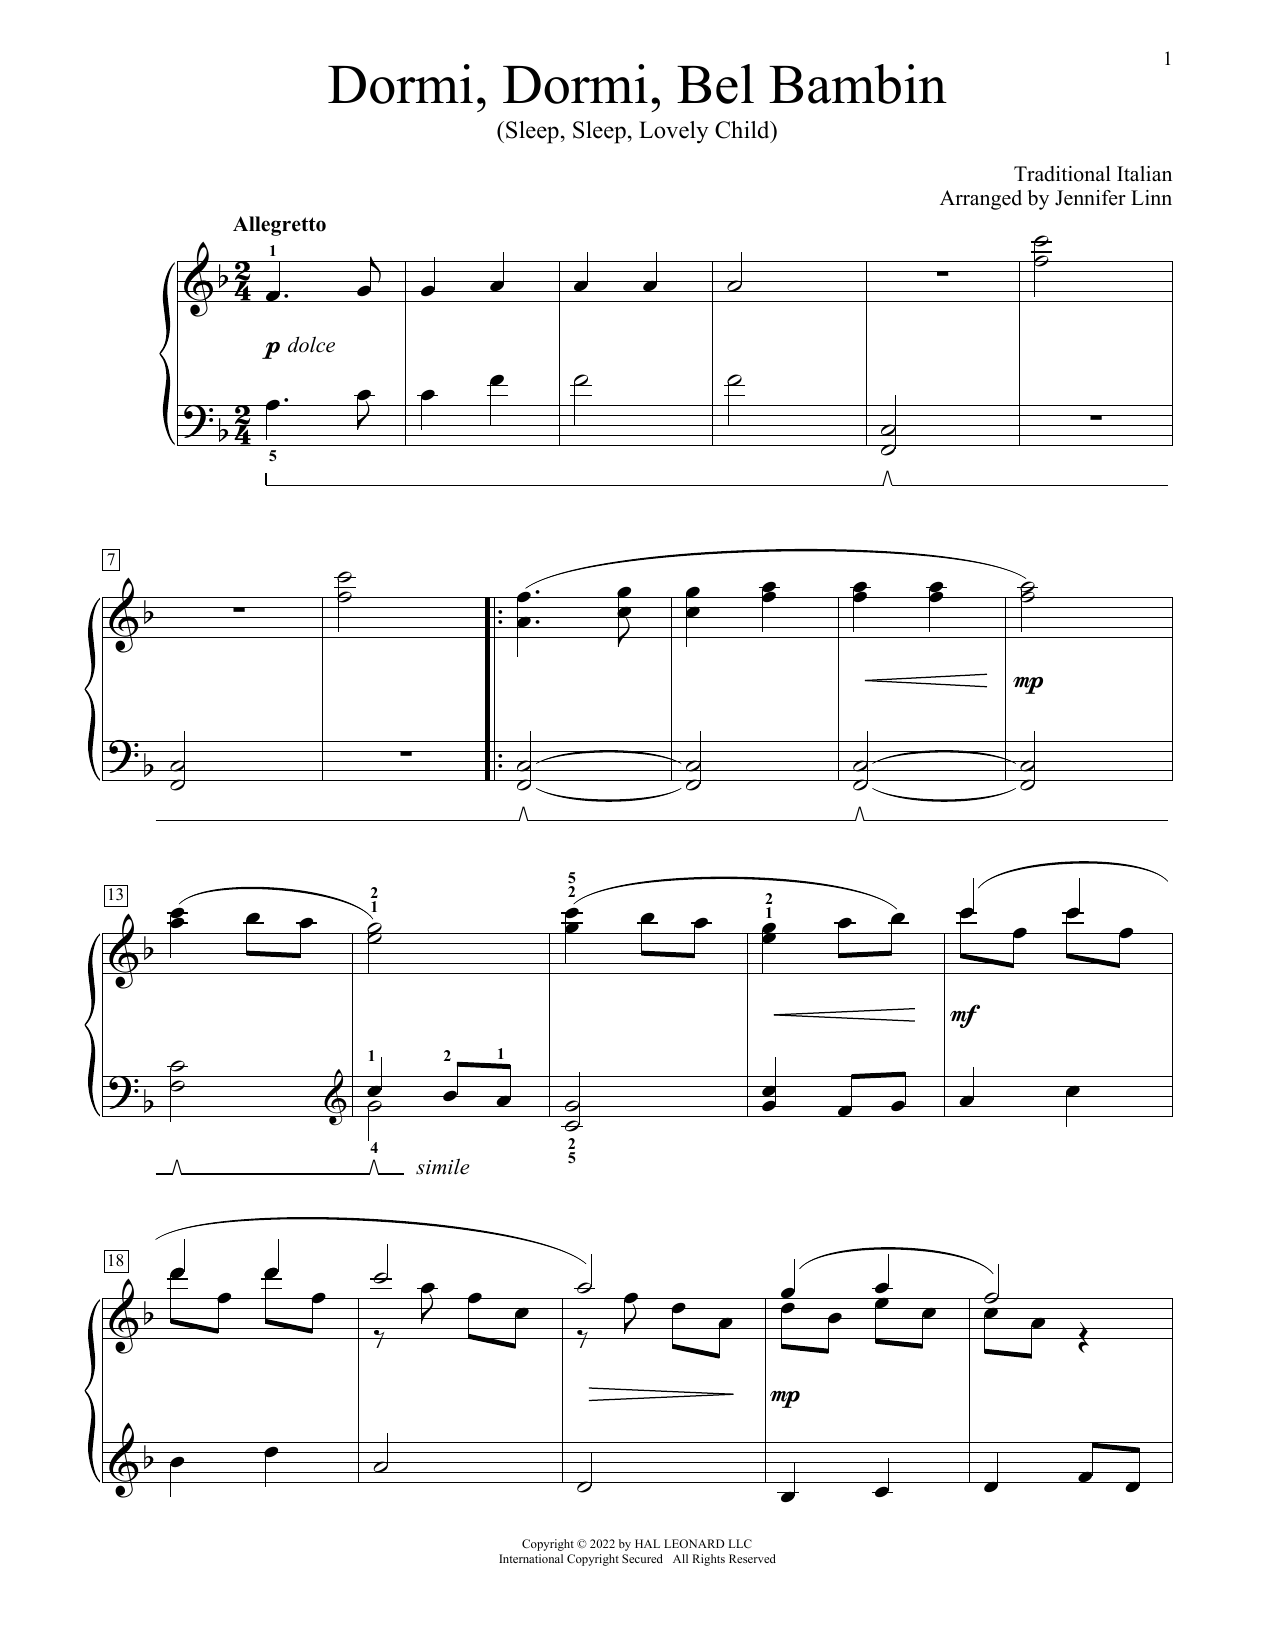 Download Traditional Italian Dormi, Dormi, Bel Bambino (arr. Jennifer Linn) Sheet Music and learn how to play Educational Piano PDF digital score in minutes